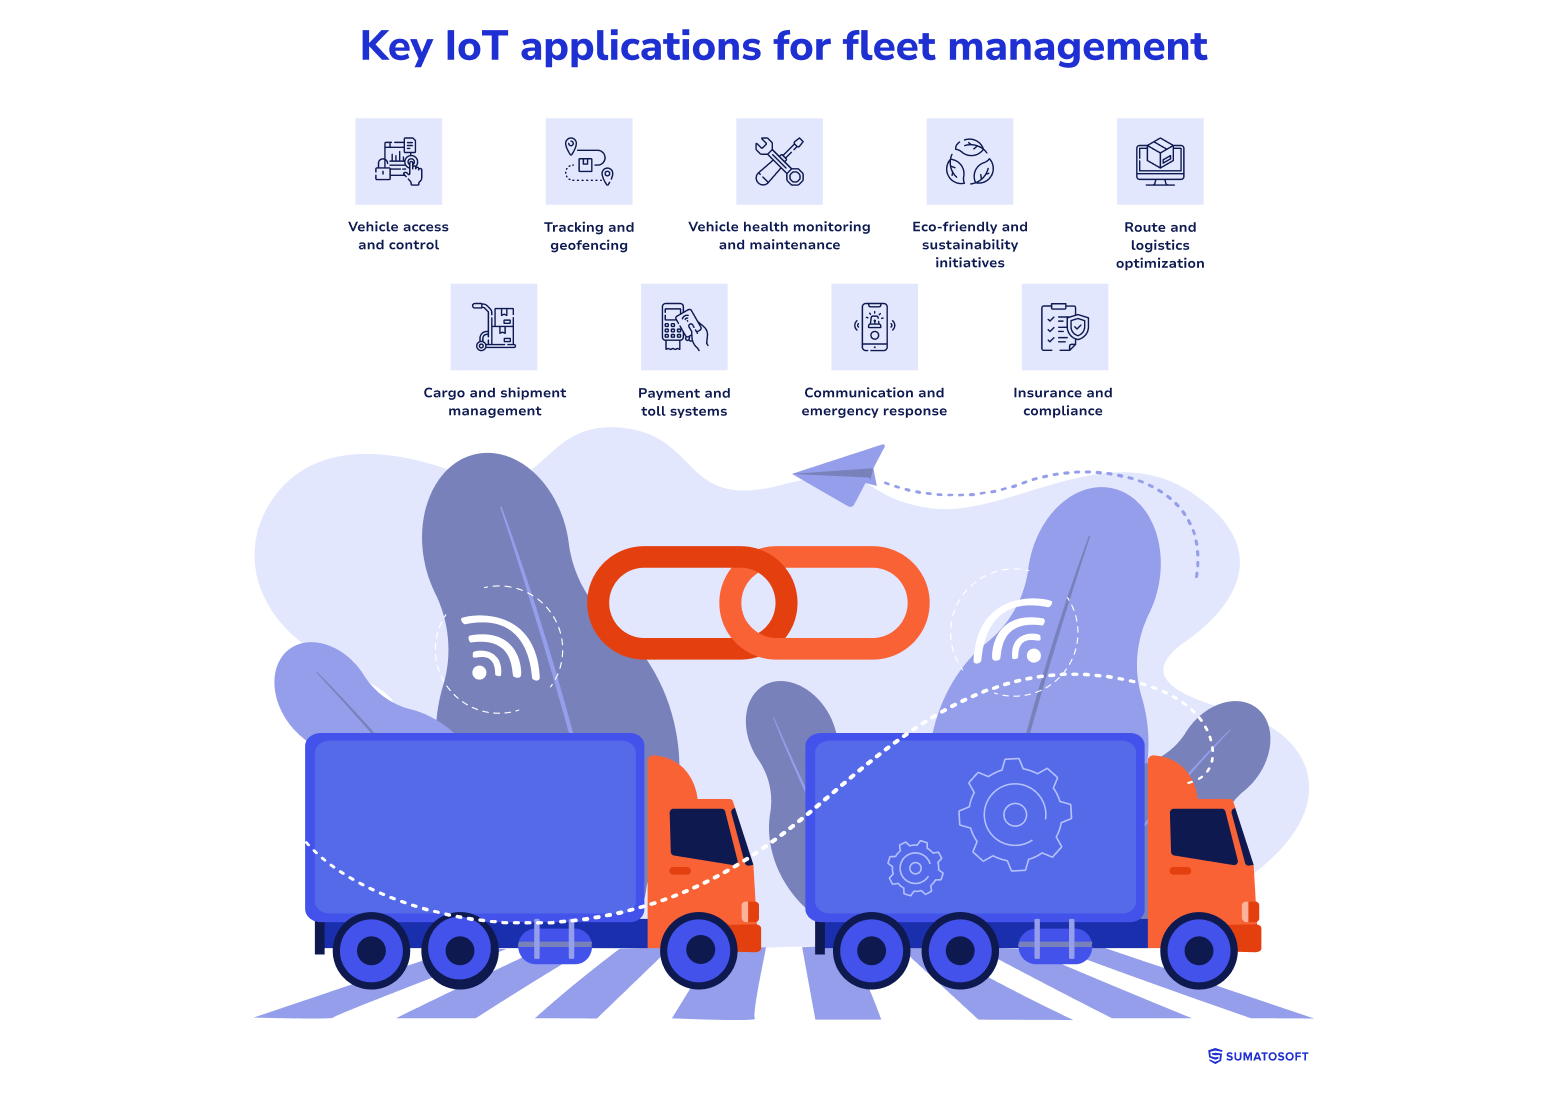 Key IoT applications for fleet management